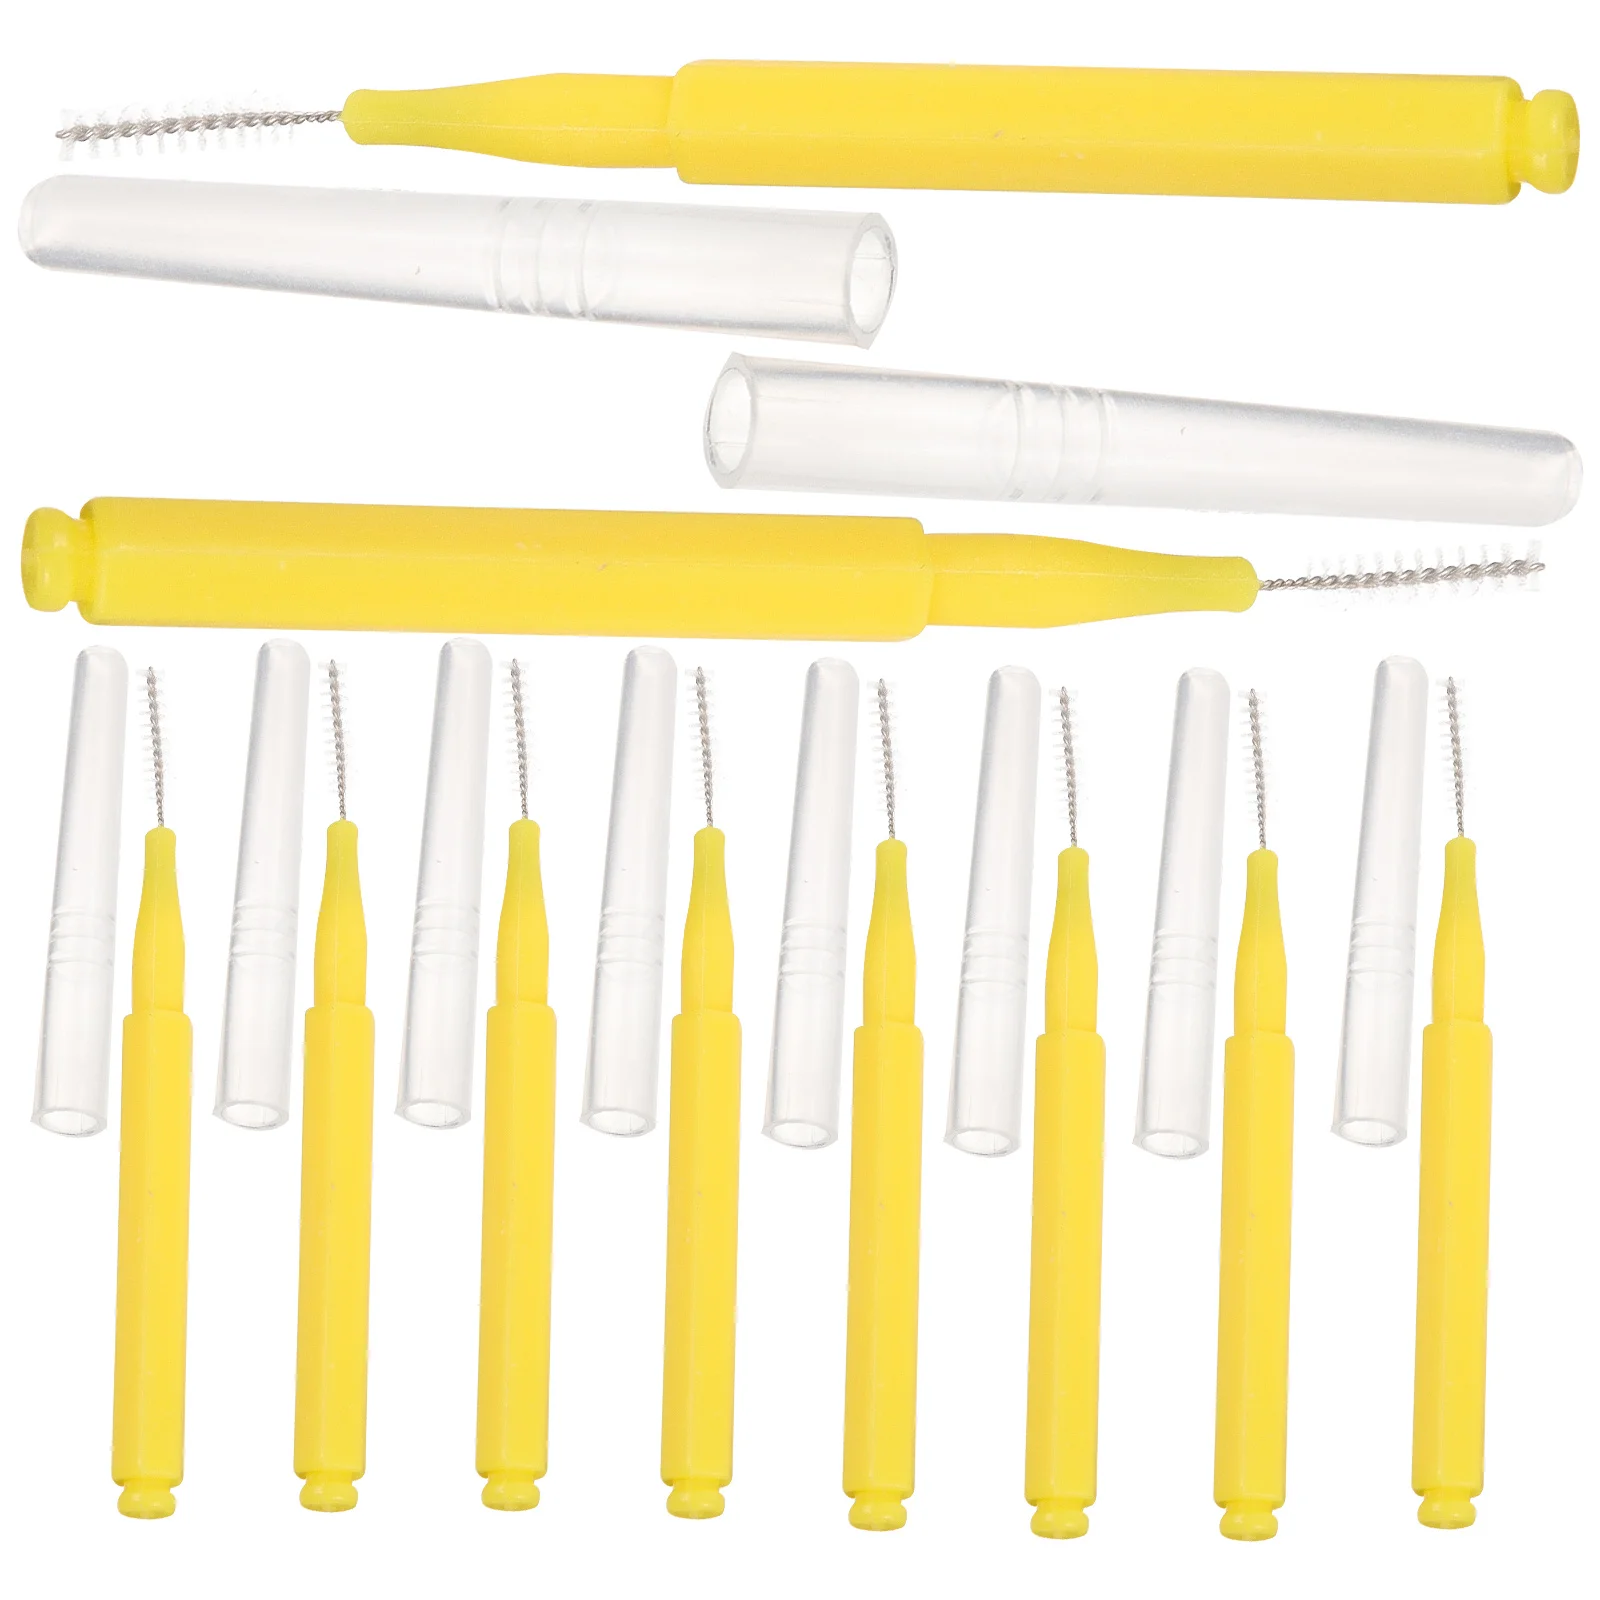 1 Box of Floss Brushes Interdental Sticks Tooth Cleaning Tool Teeth Gum Brace Brush Floss Picks Interdental Cleaner